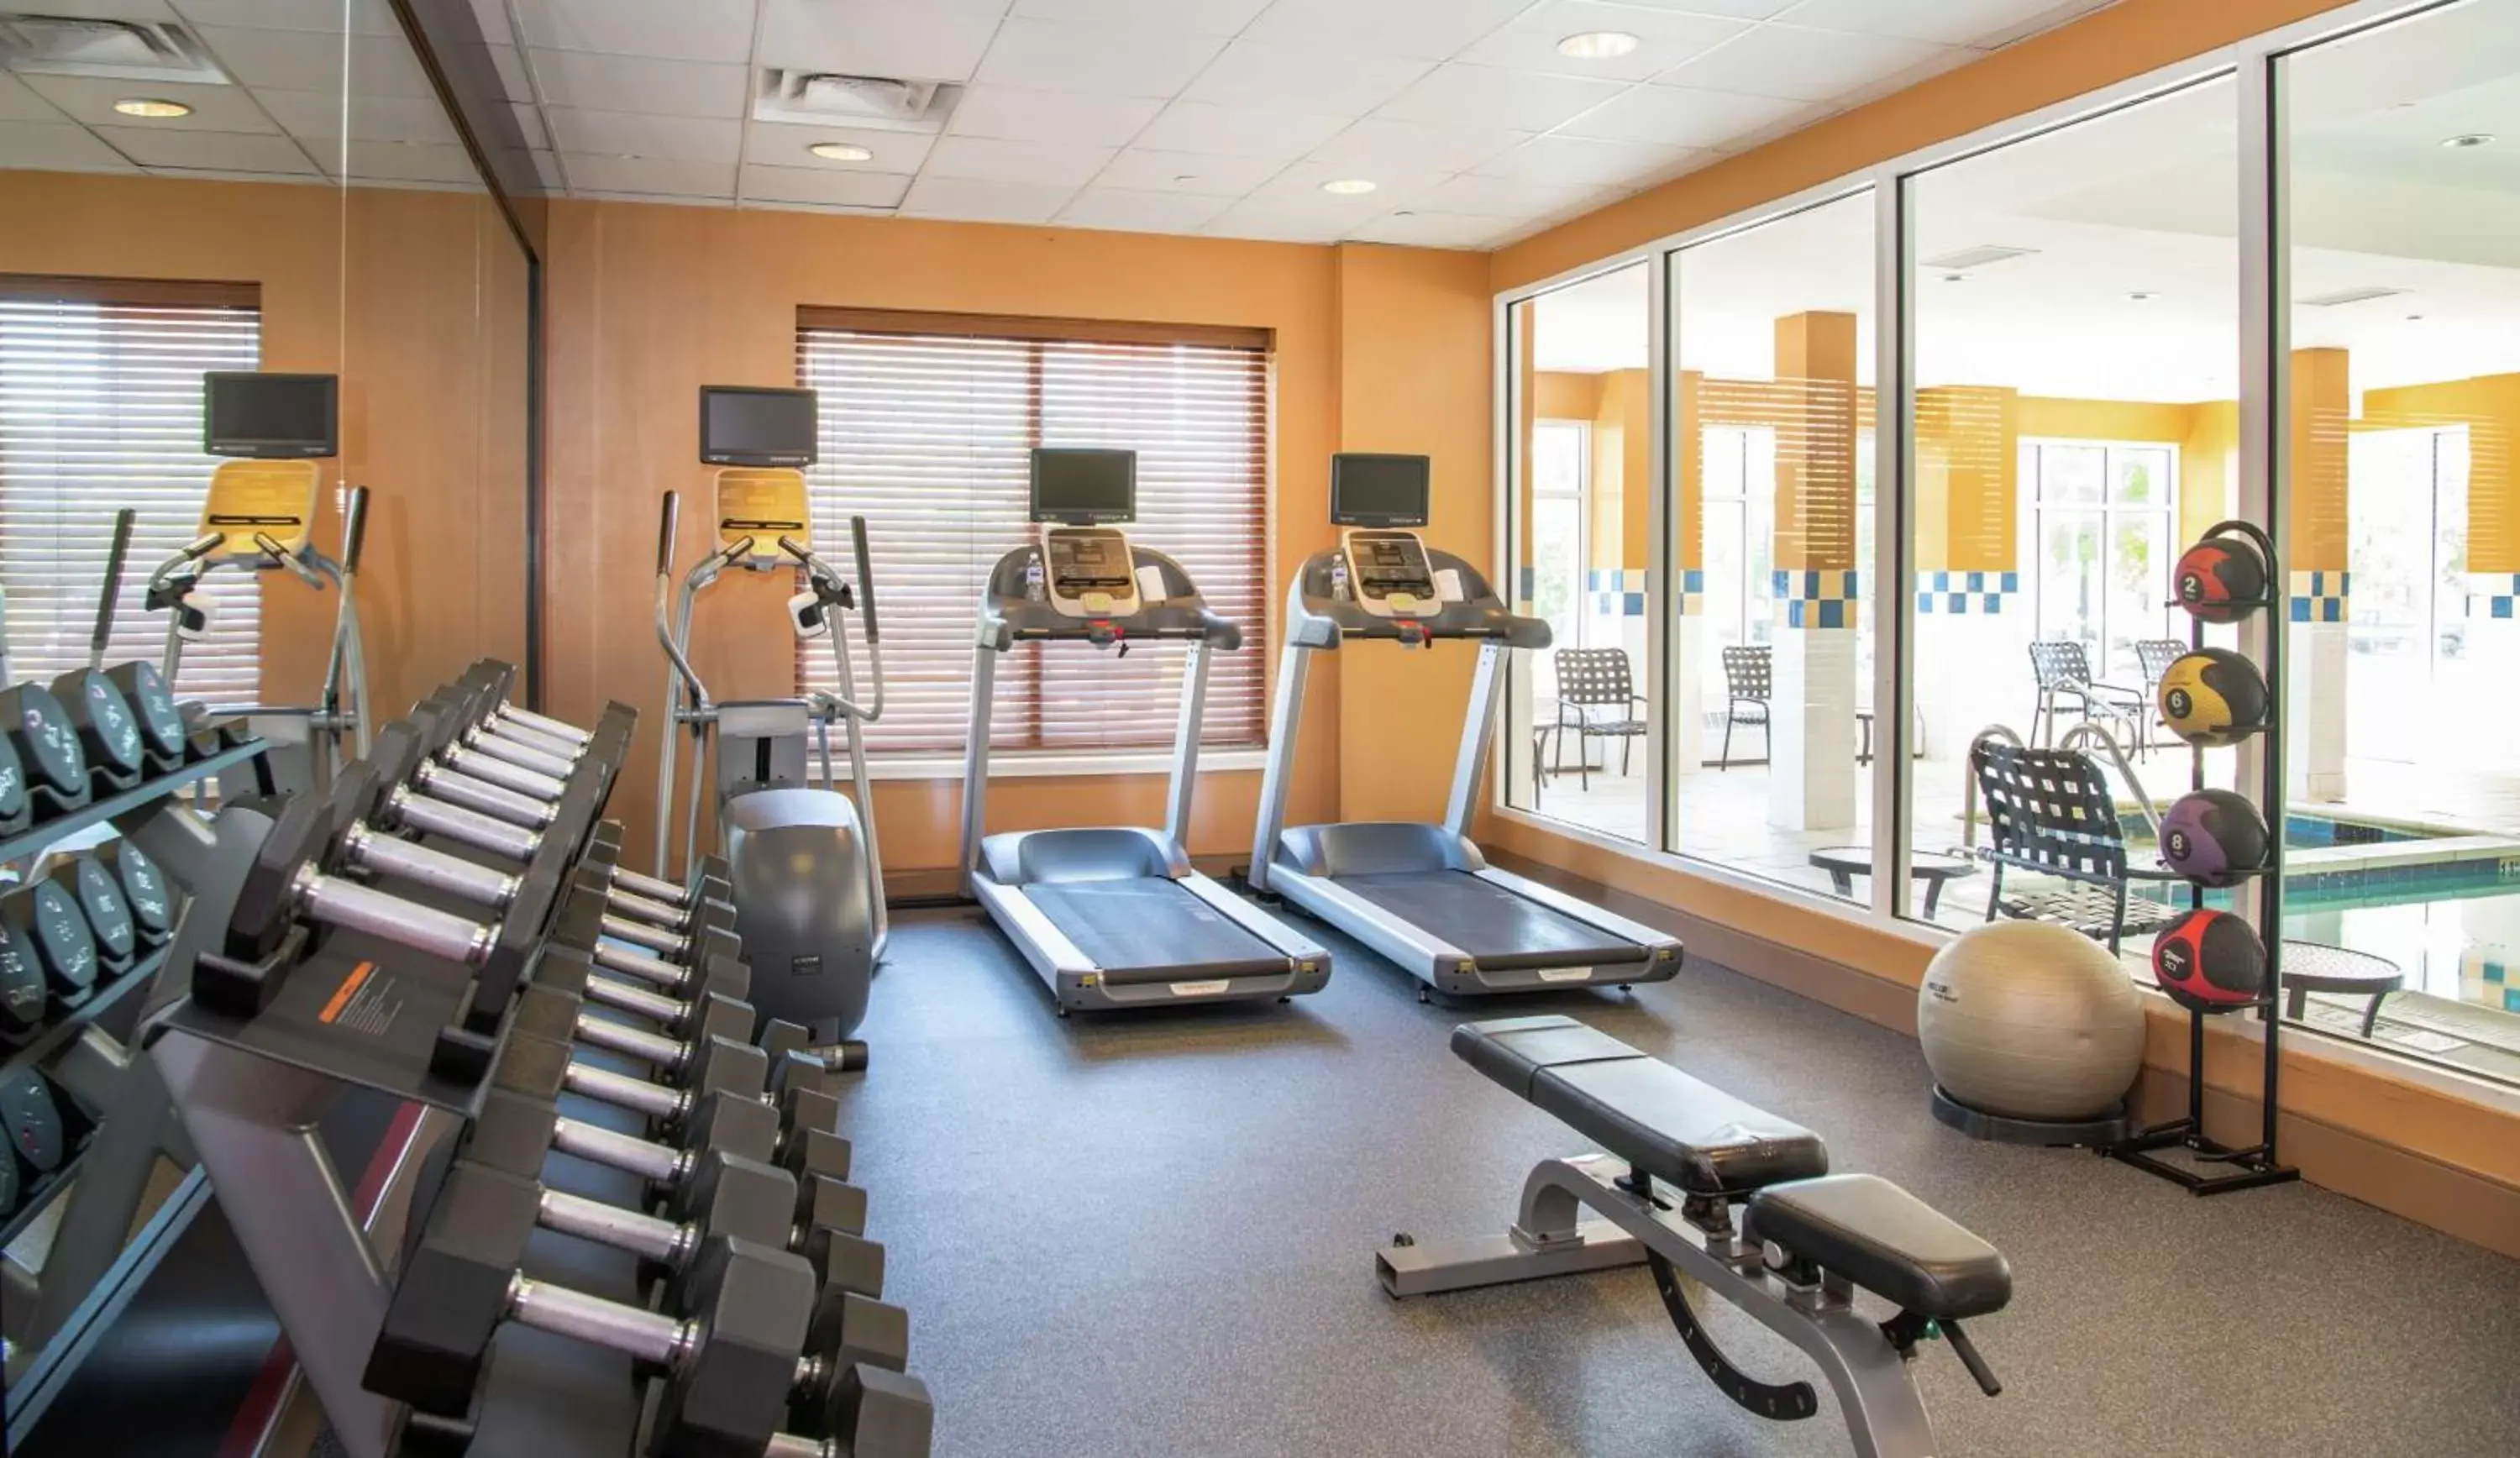 Fitness centre/facilities, Fitness Center/Facilities in Hilton Garden Inn BWI Airport